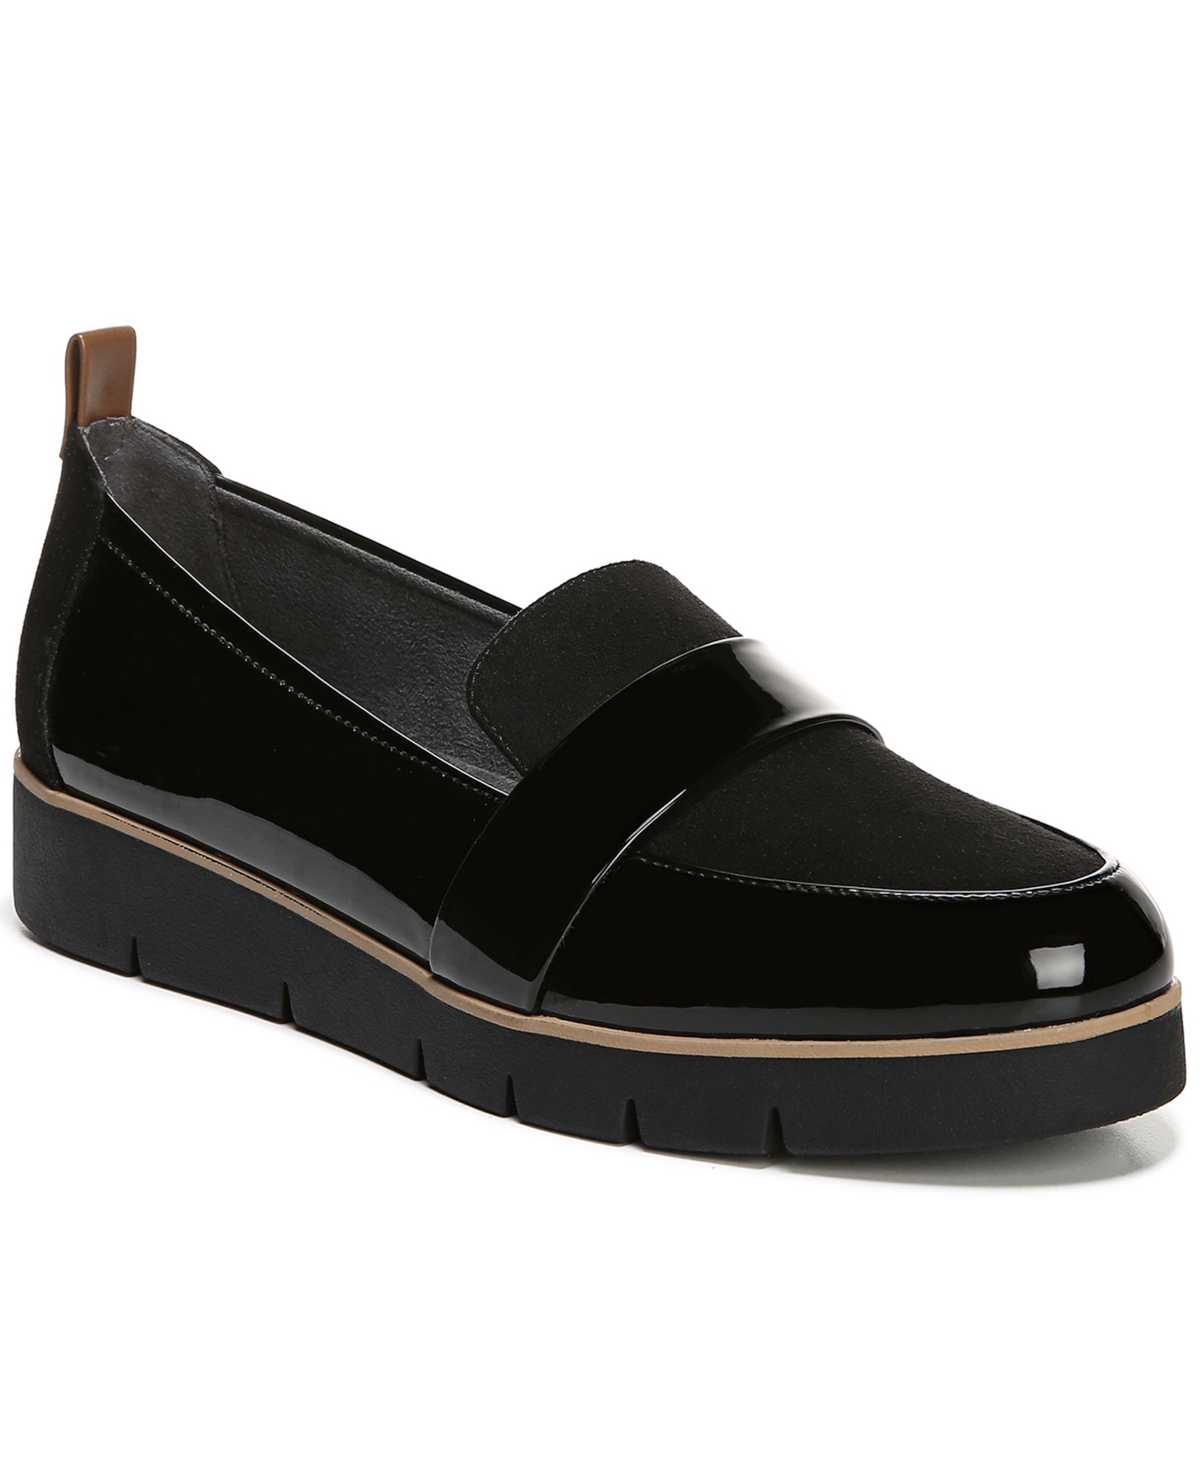 Women's Webster Slip-on Loafers - Black